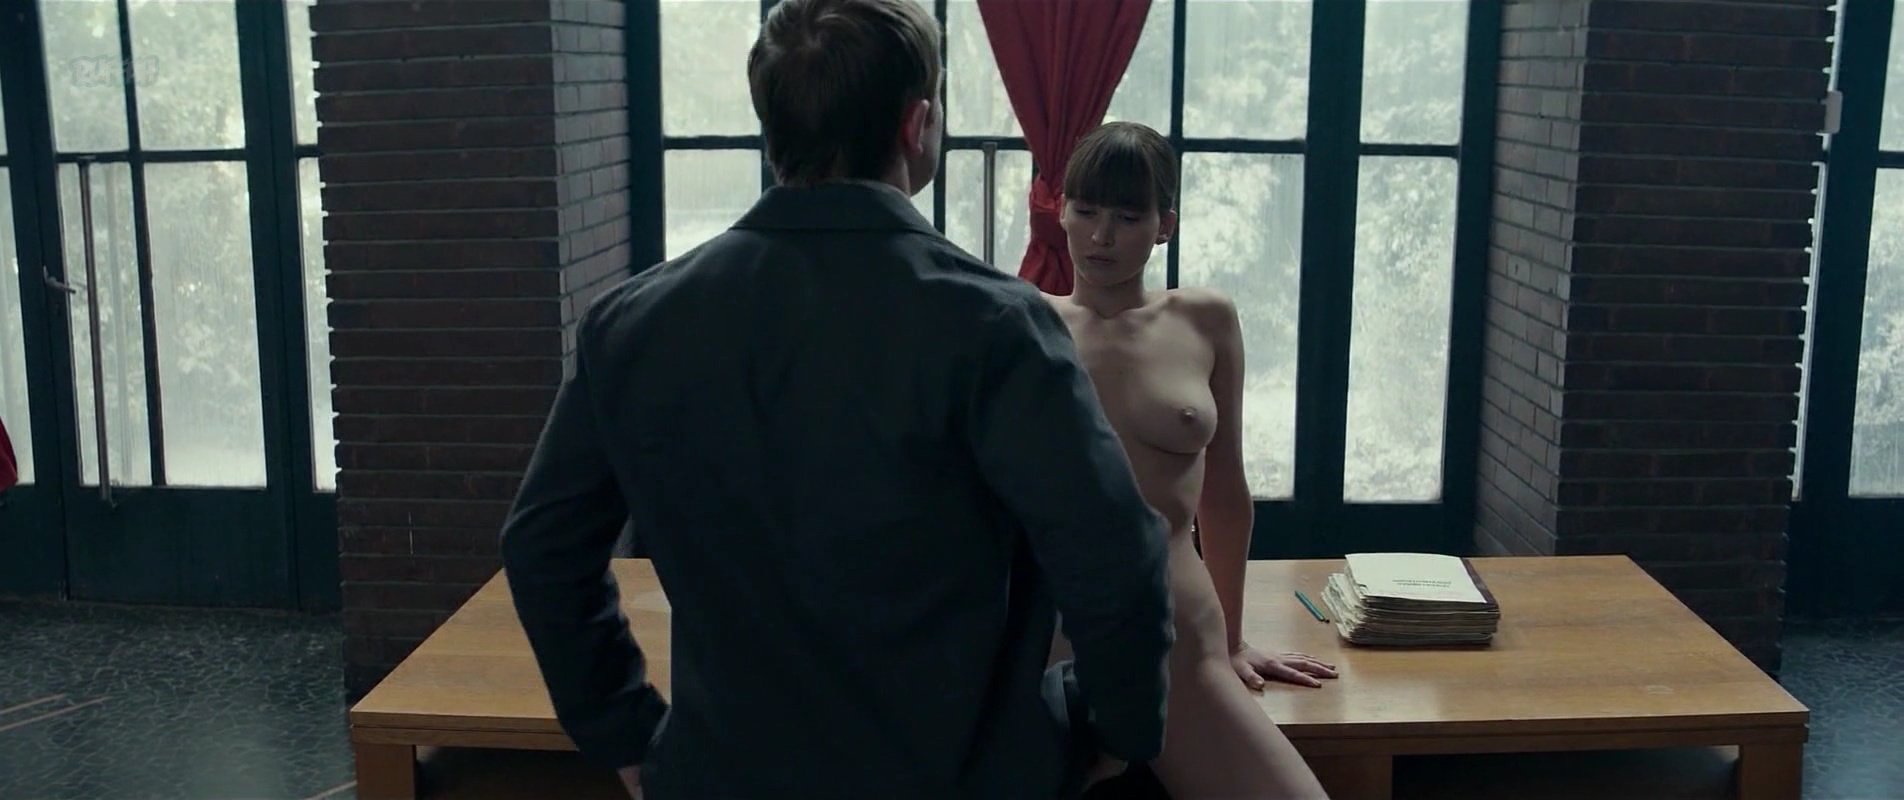 Jennifer lawrence naked scene